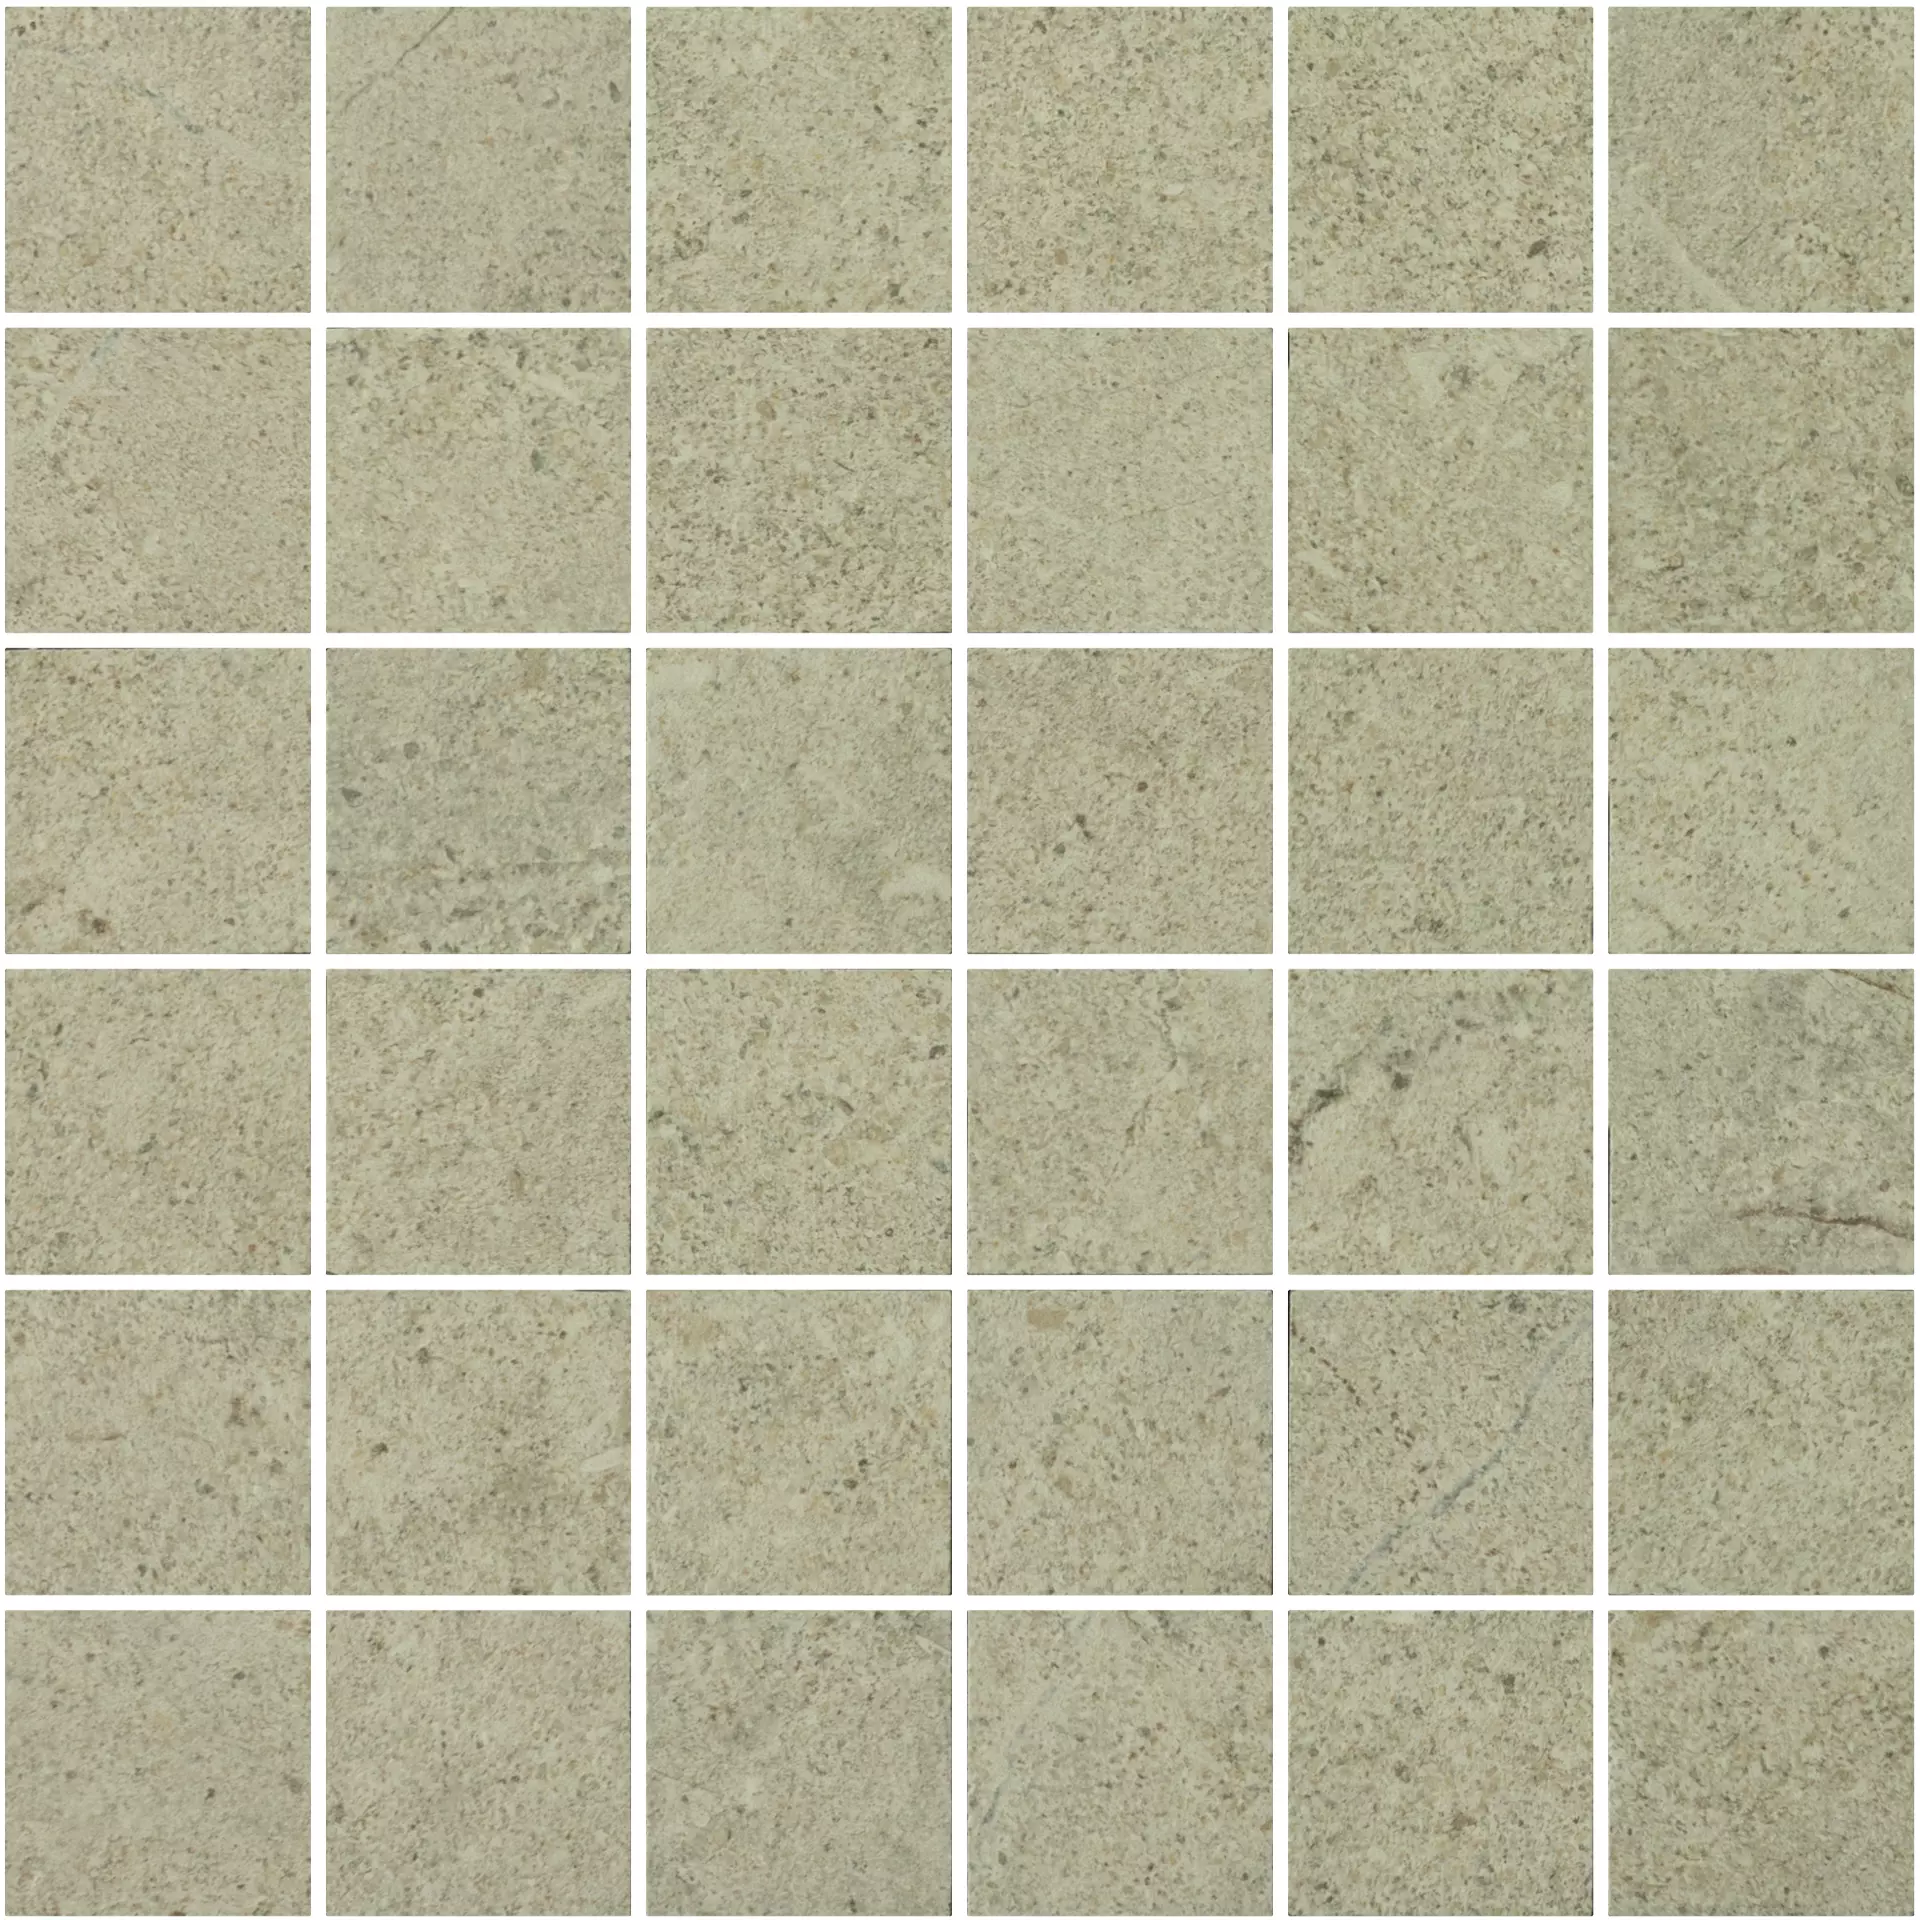 Cercom Archistone Sand Naturale Mosaic 5X5 1081854 30x30cm rectified